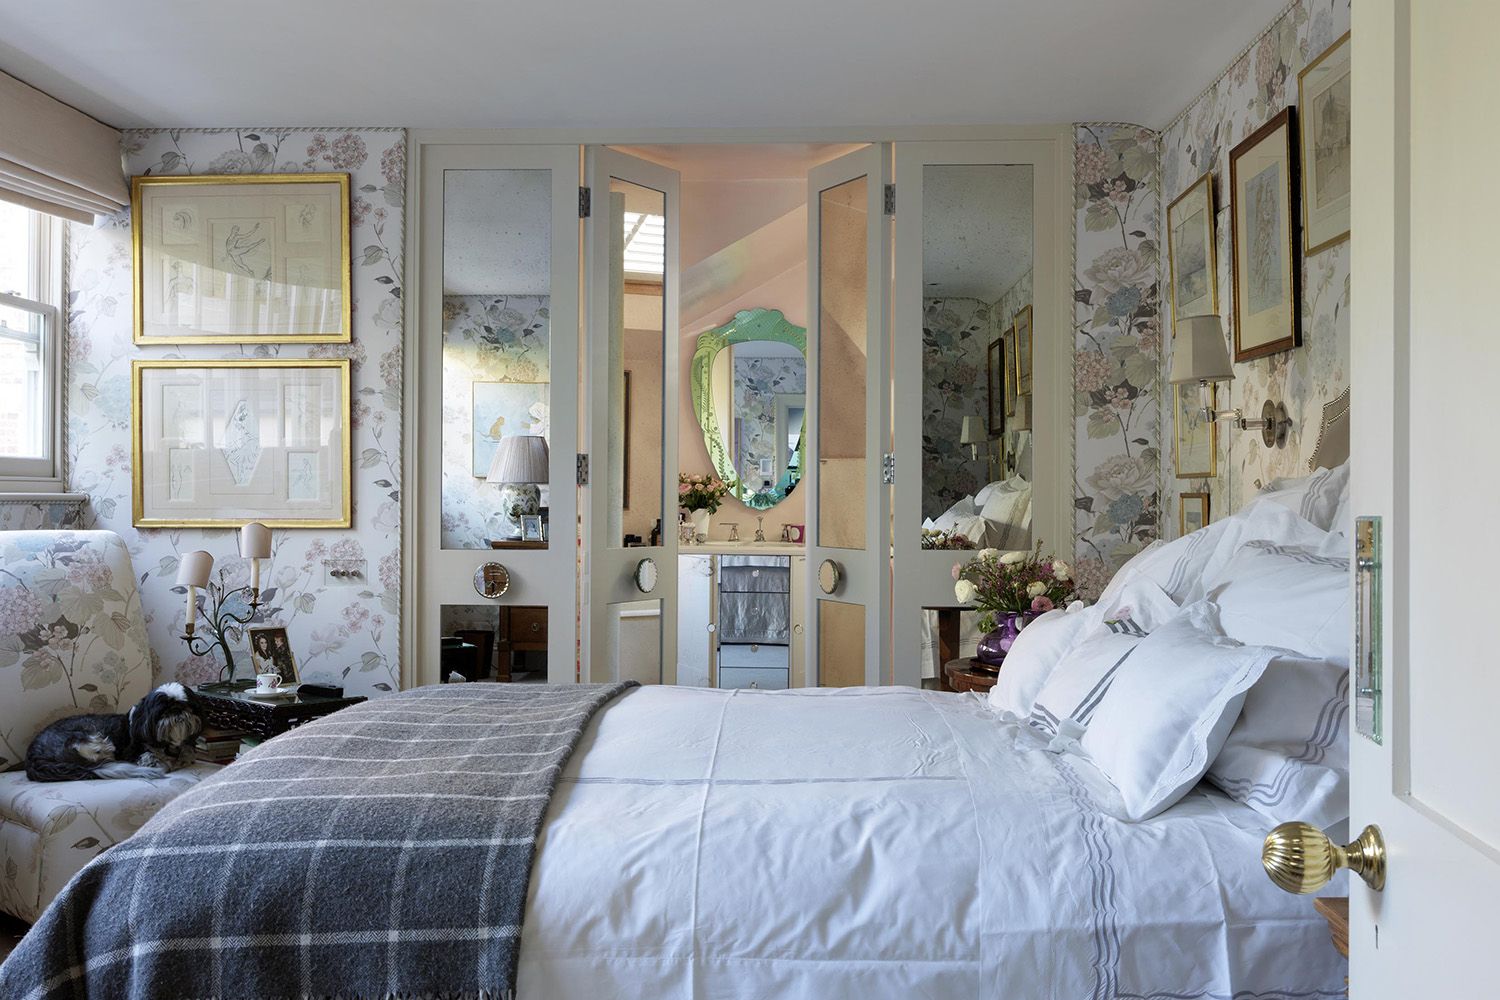 Nina Campbell on avoiding bedroom design mistakes | Homes & Gardens